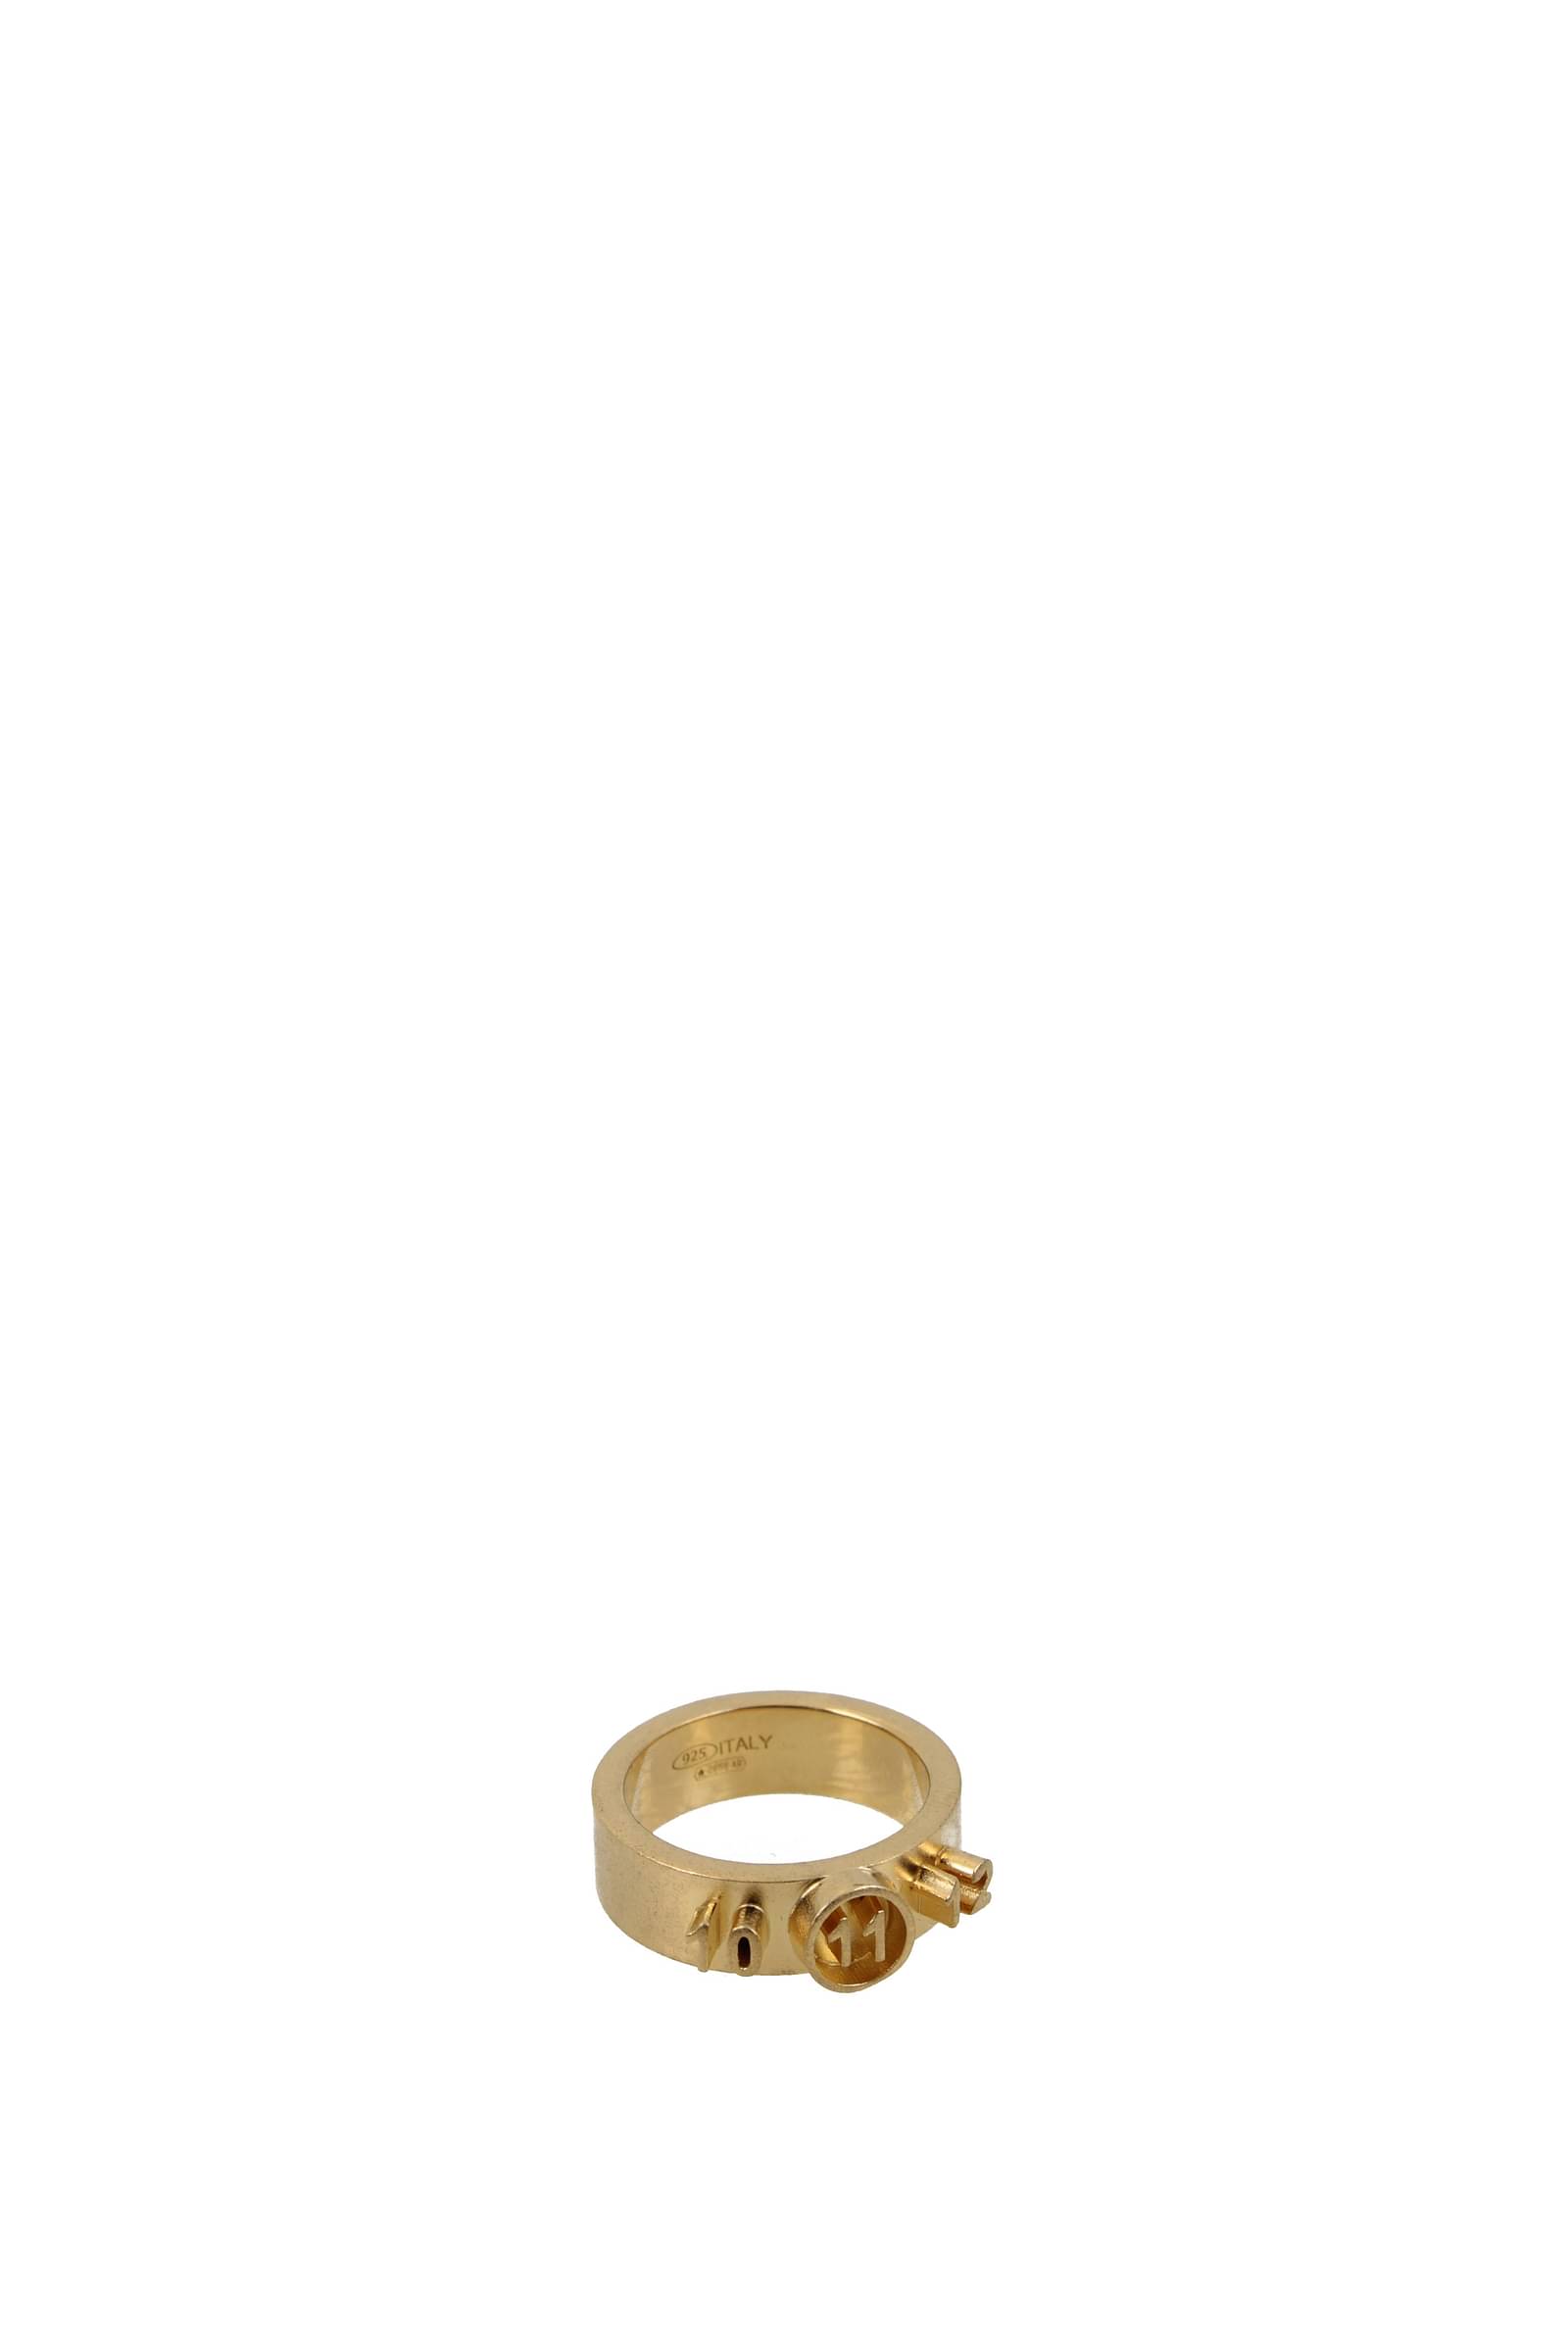 AngieDiors  Hand jewelry rings Dior ring Dior jewelry